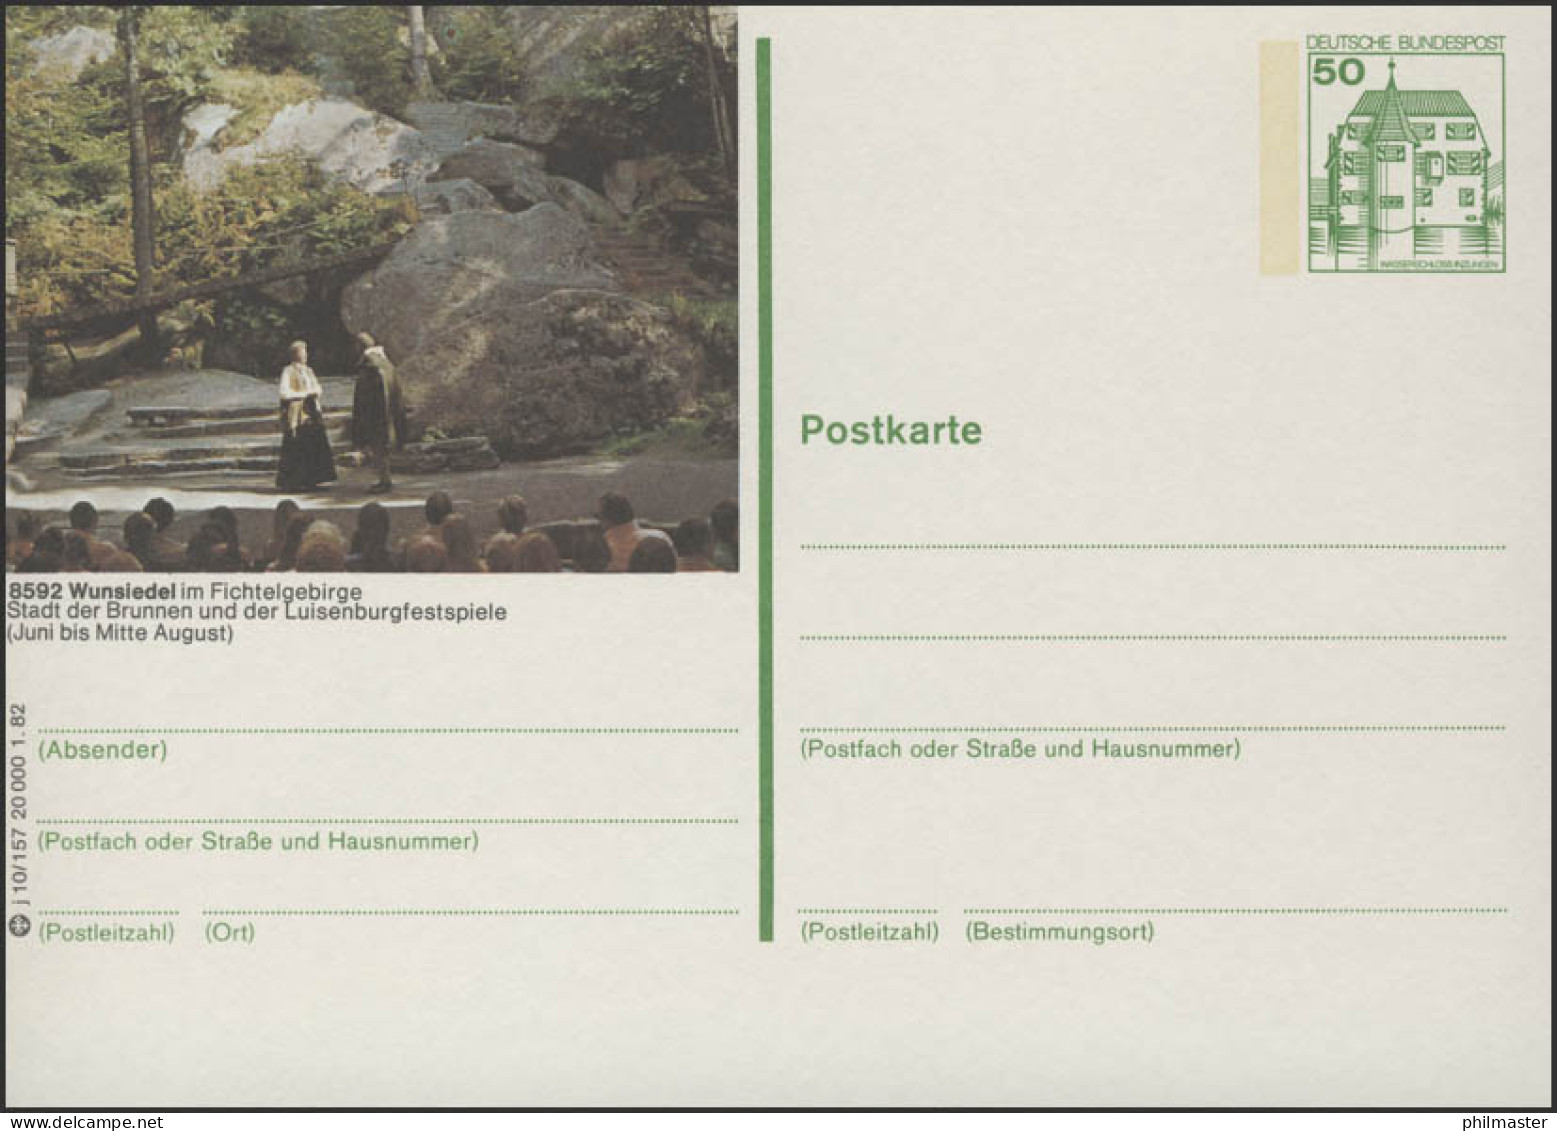 P134-j10/157 8592 Wunsiedel - Luisenburgfestspiele ** - Illustrated Postcards - Mint